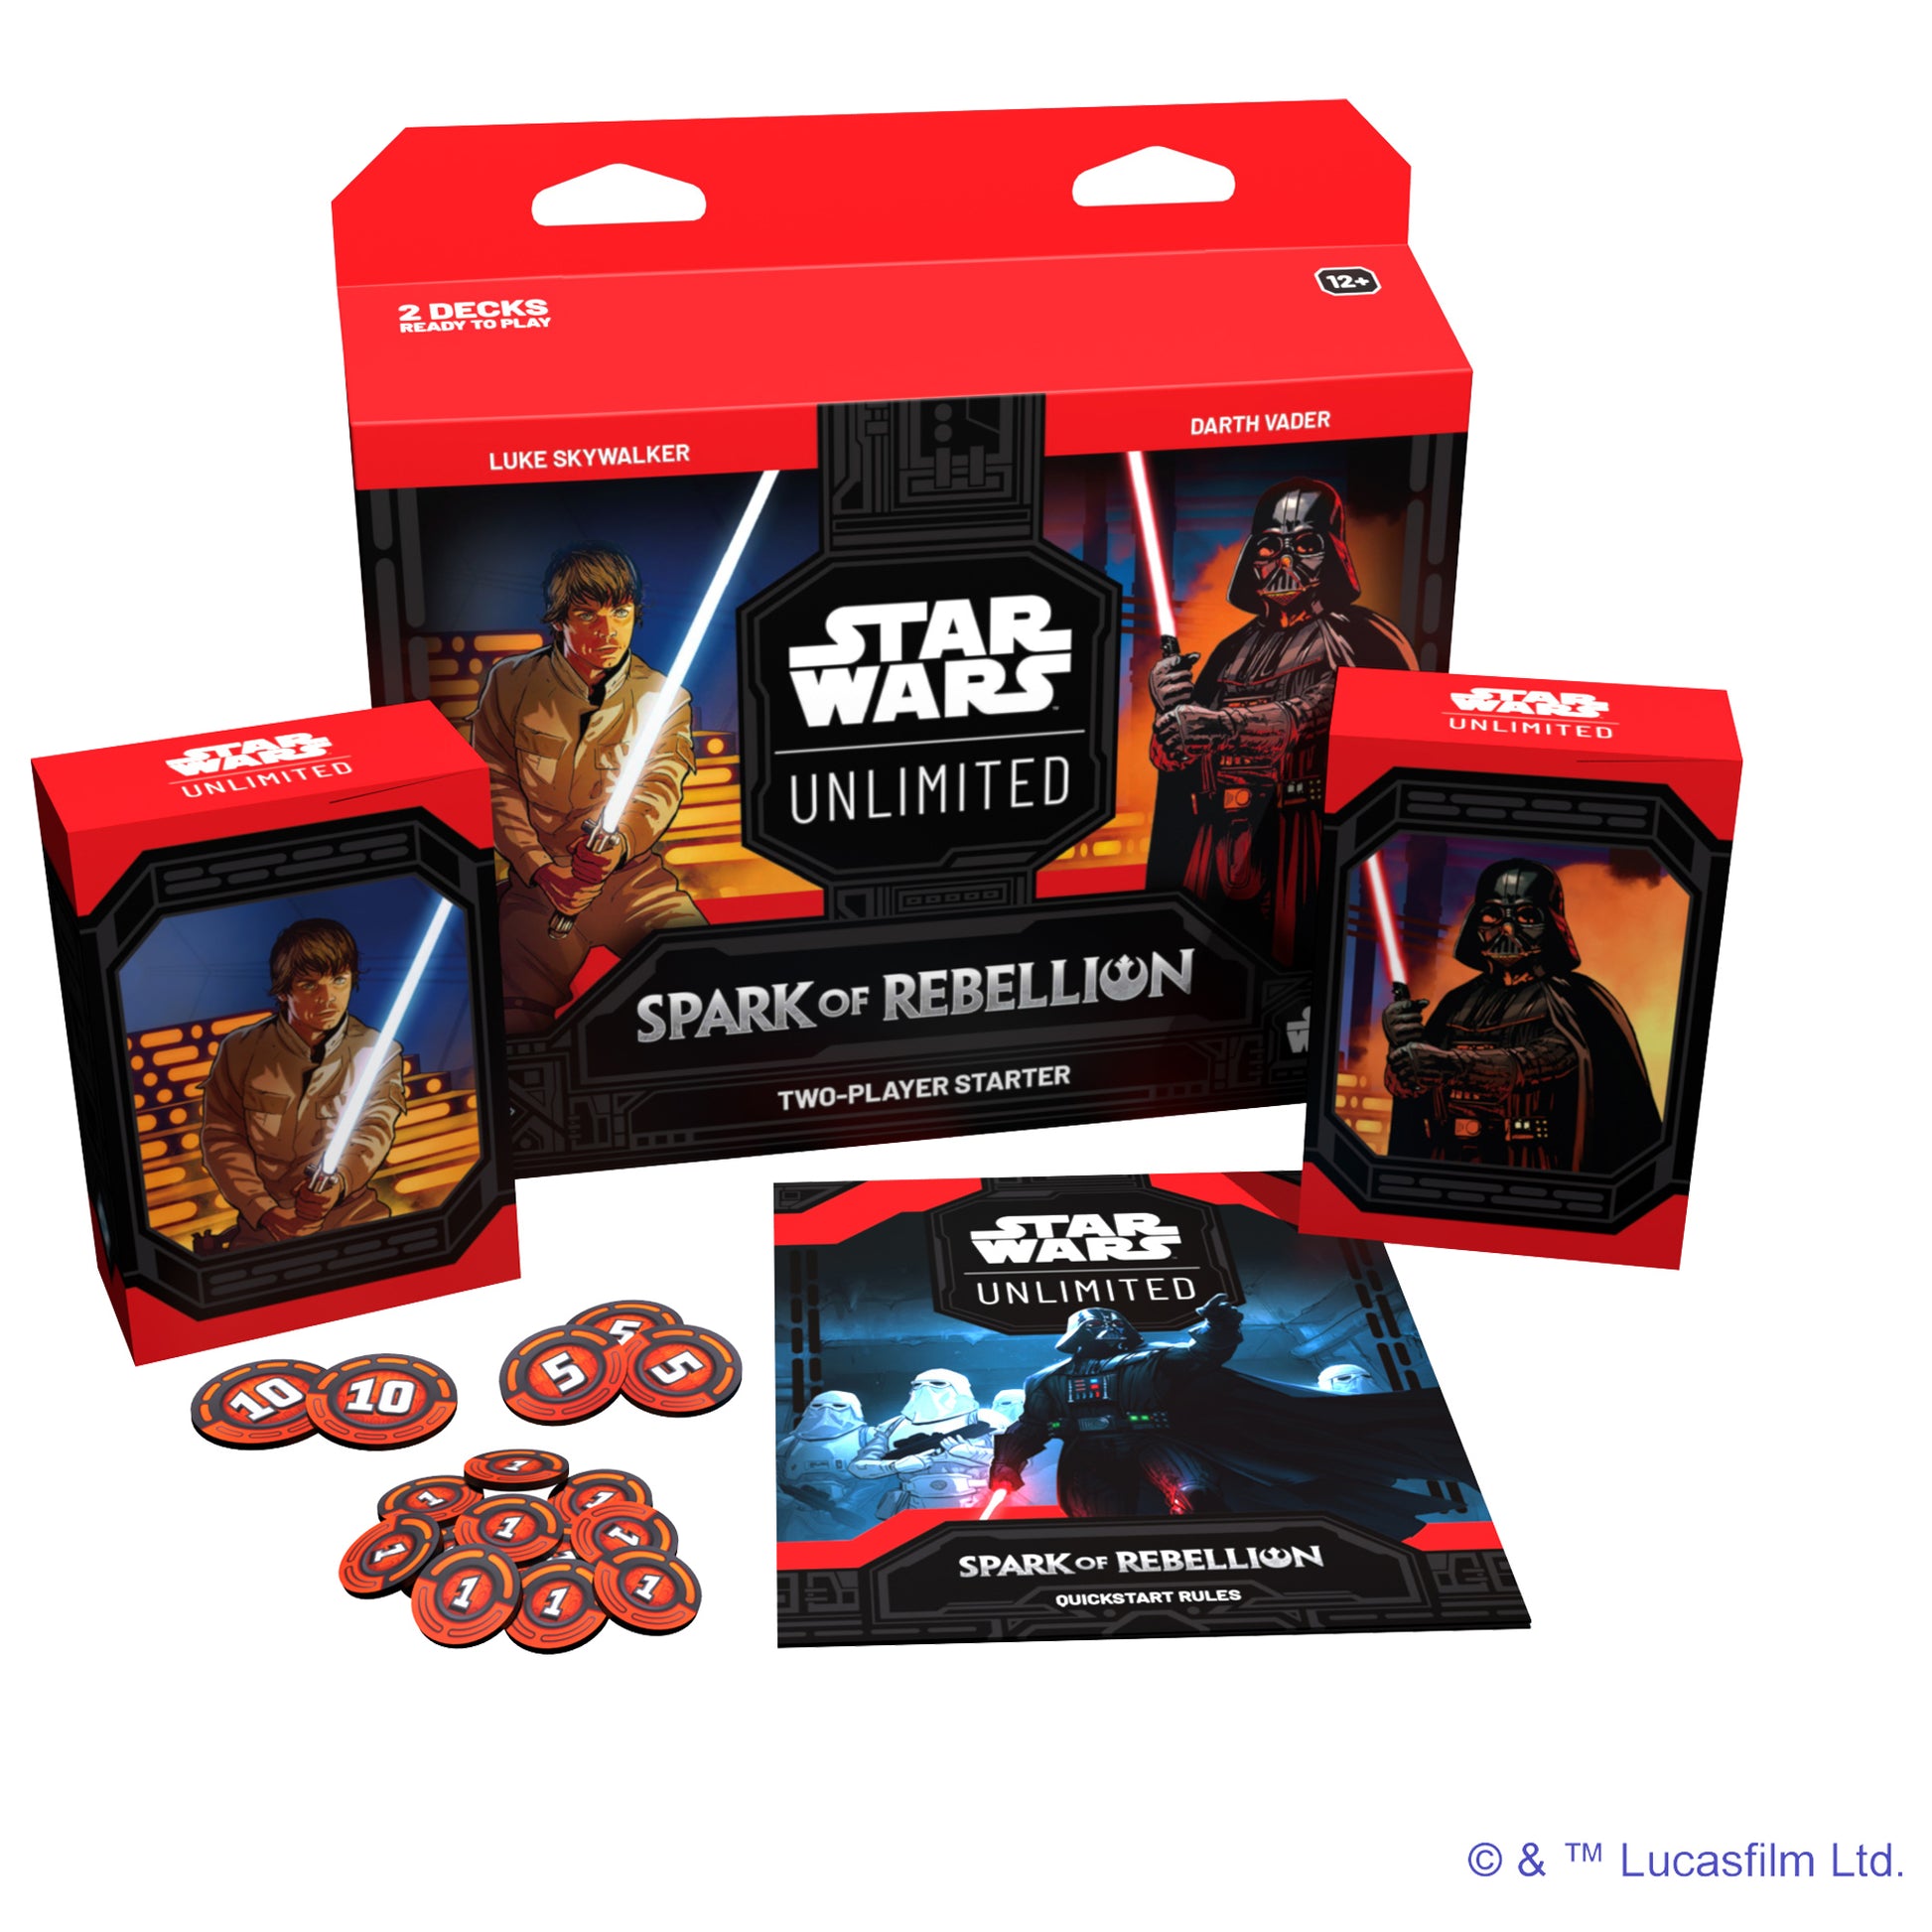 Star Wars Unlimited Spark of Rebellion 2-Player Starter Kit